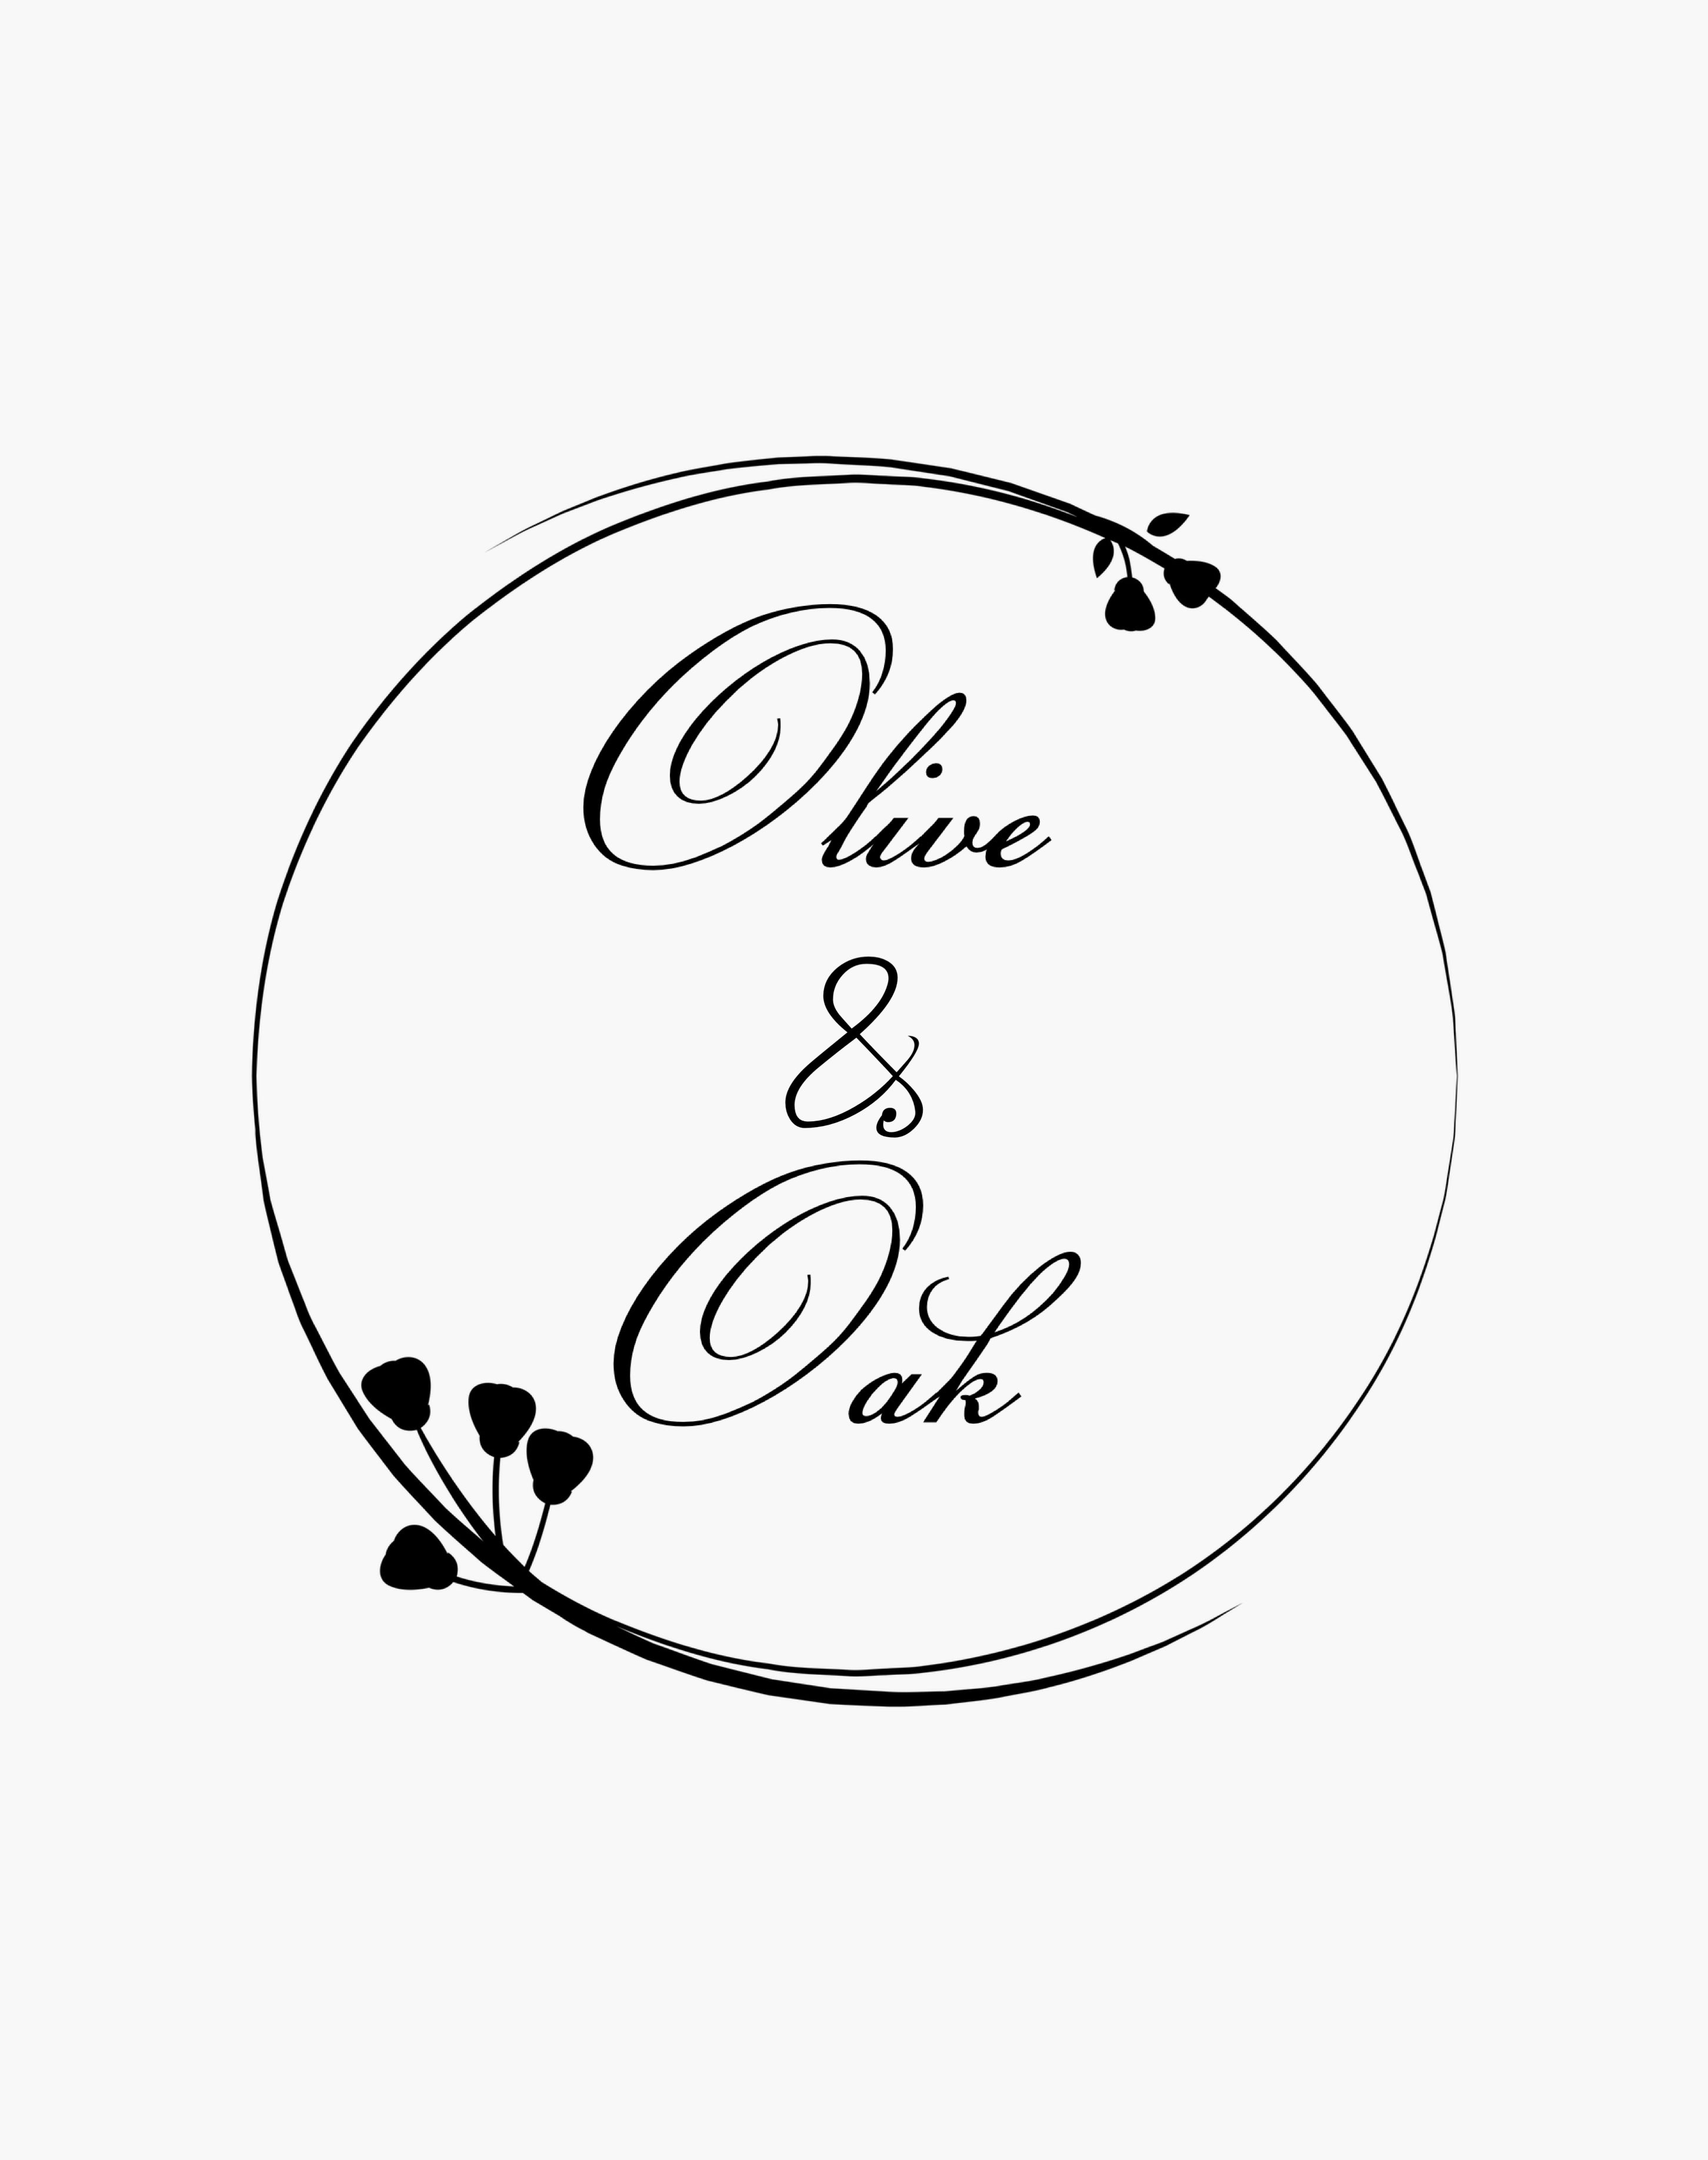 Olive & Oak Company added a new photo. - Olive & Oak Company